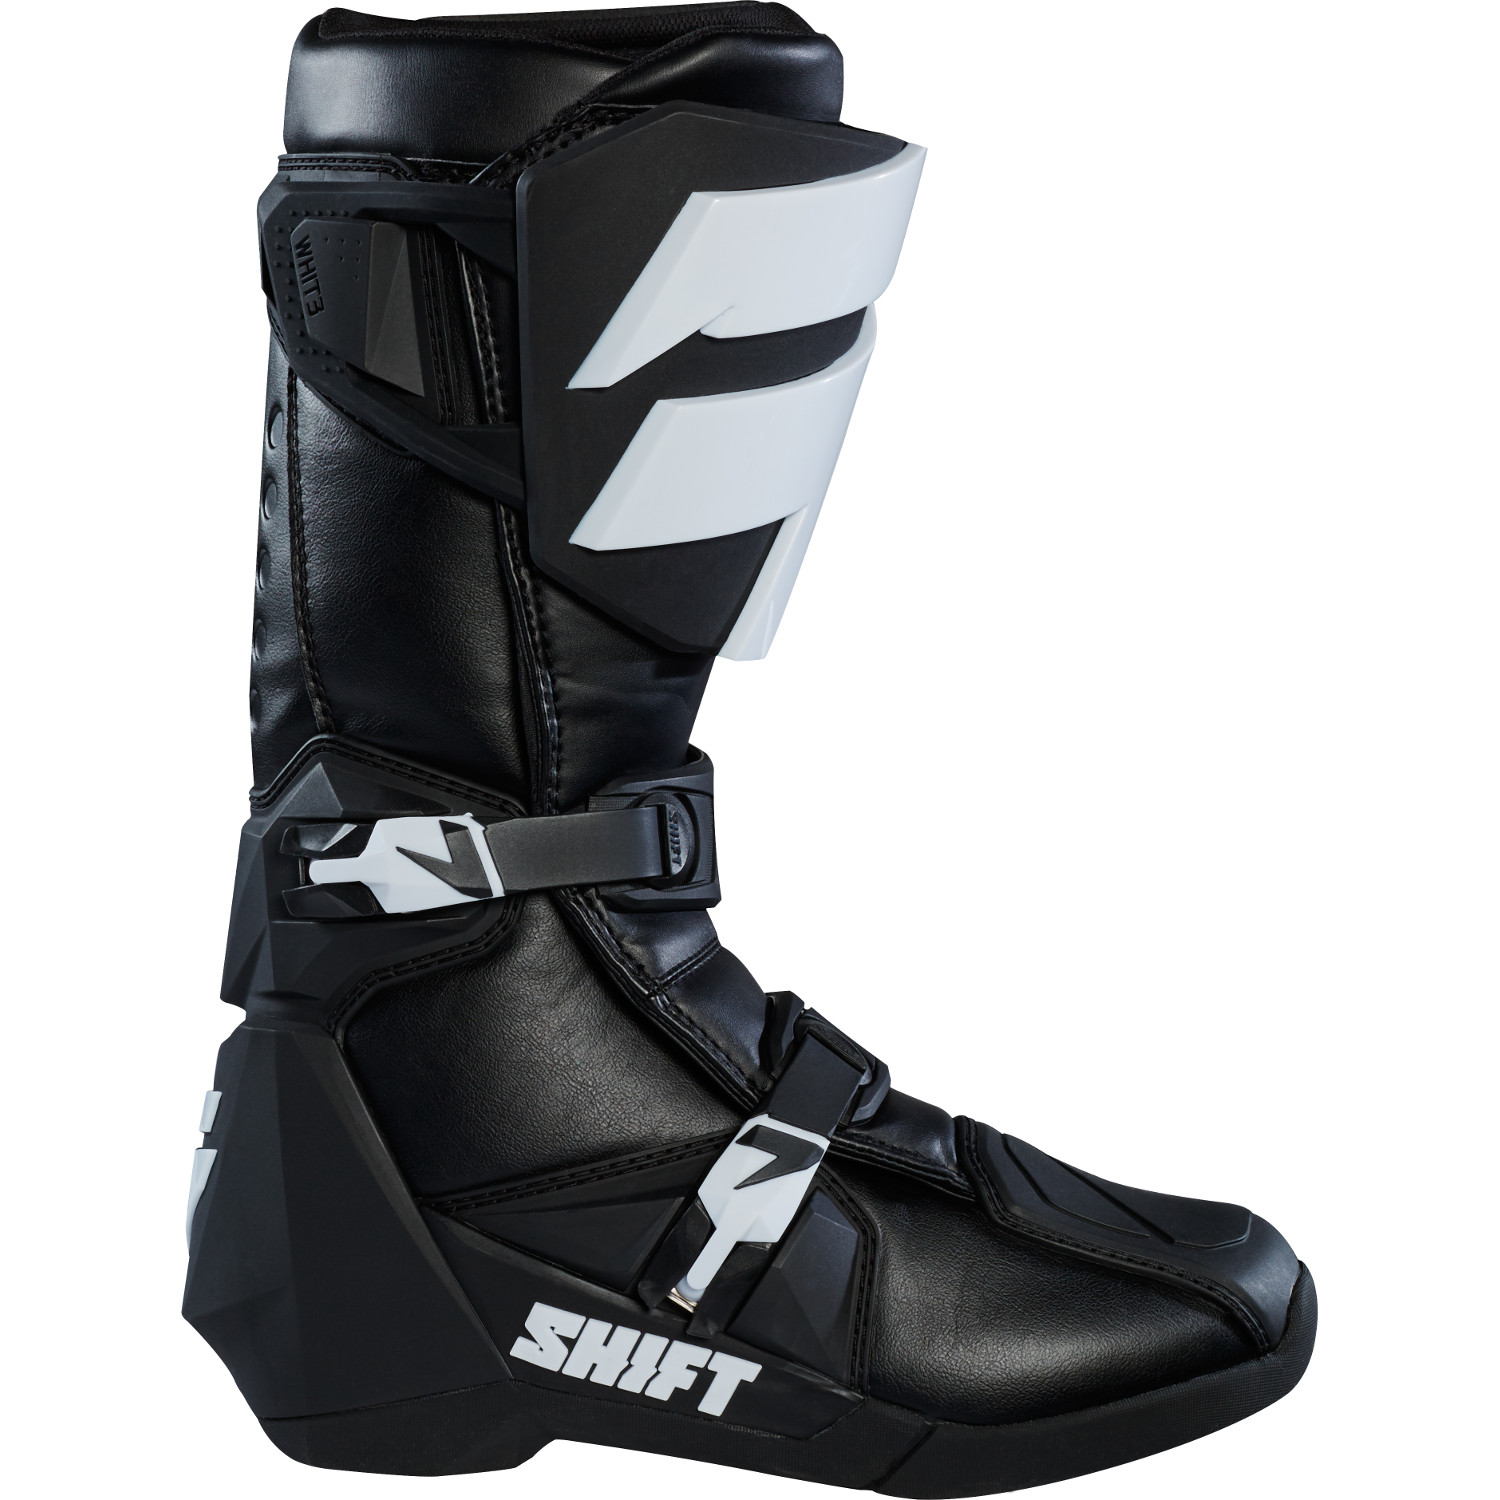 Shift MX Boots Whit3 Label Black 